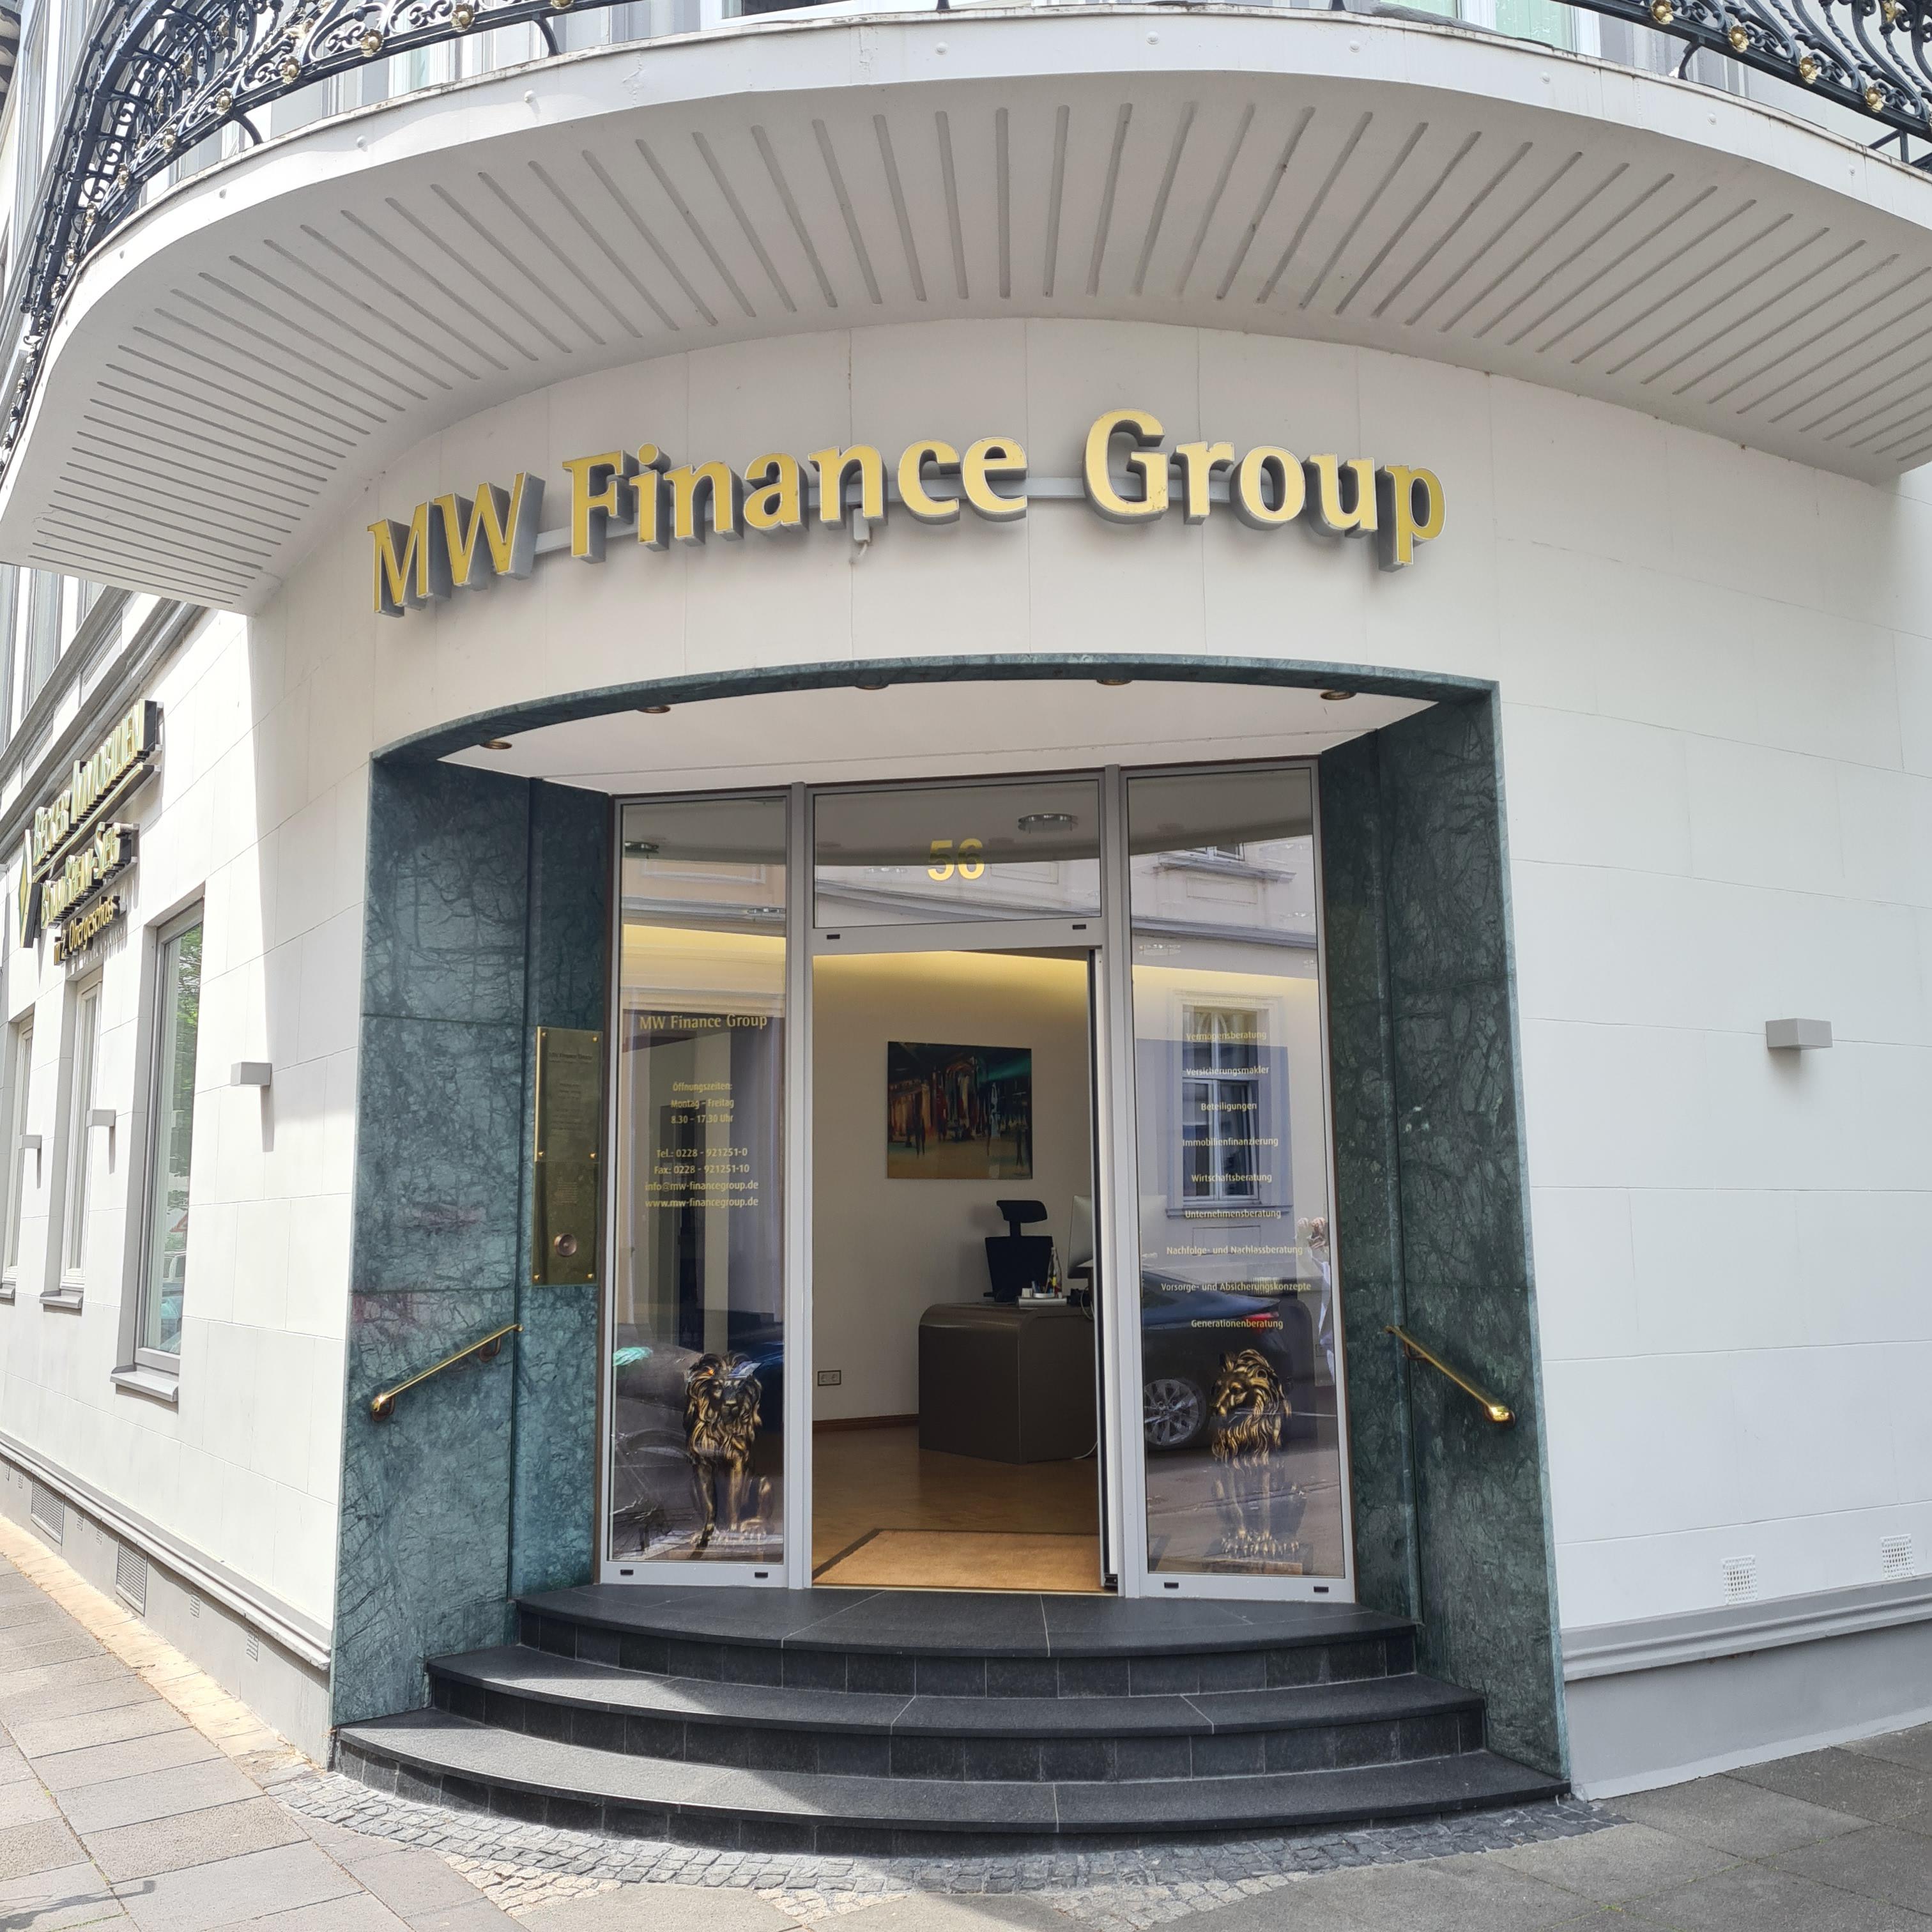 MW Finance Group, Lennéstraße 56 in Bonn